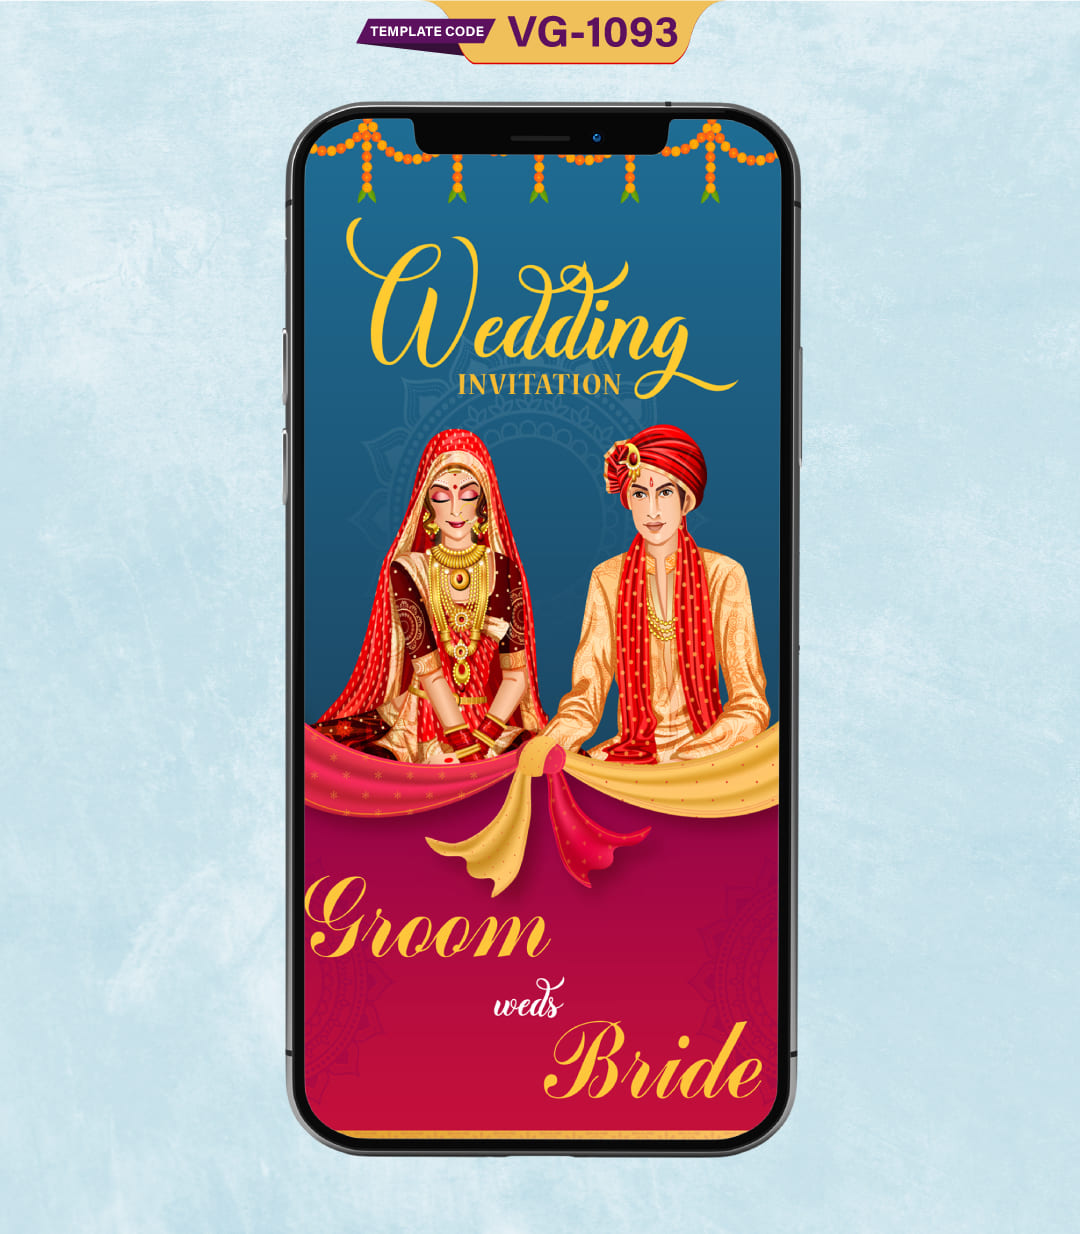 Hindu Wedding Invitation